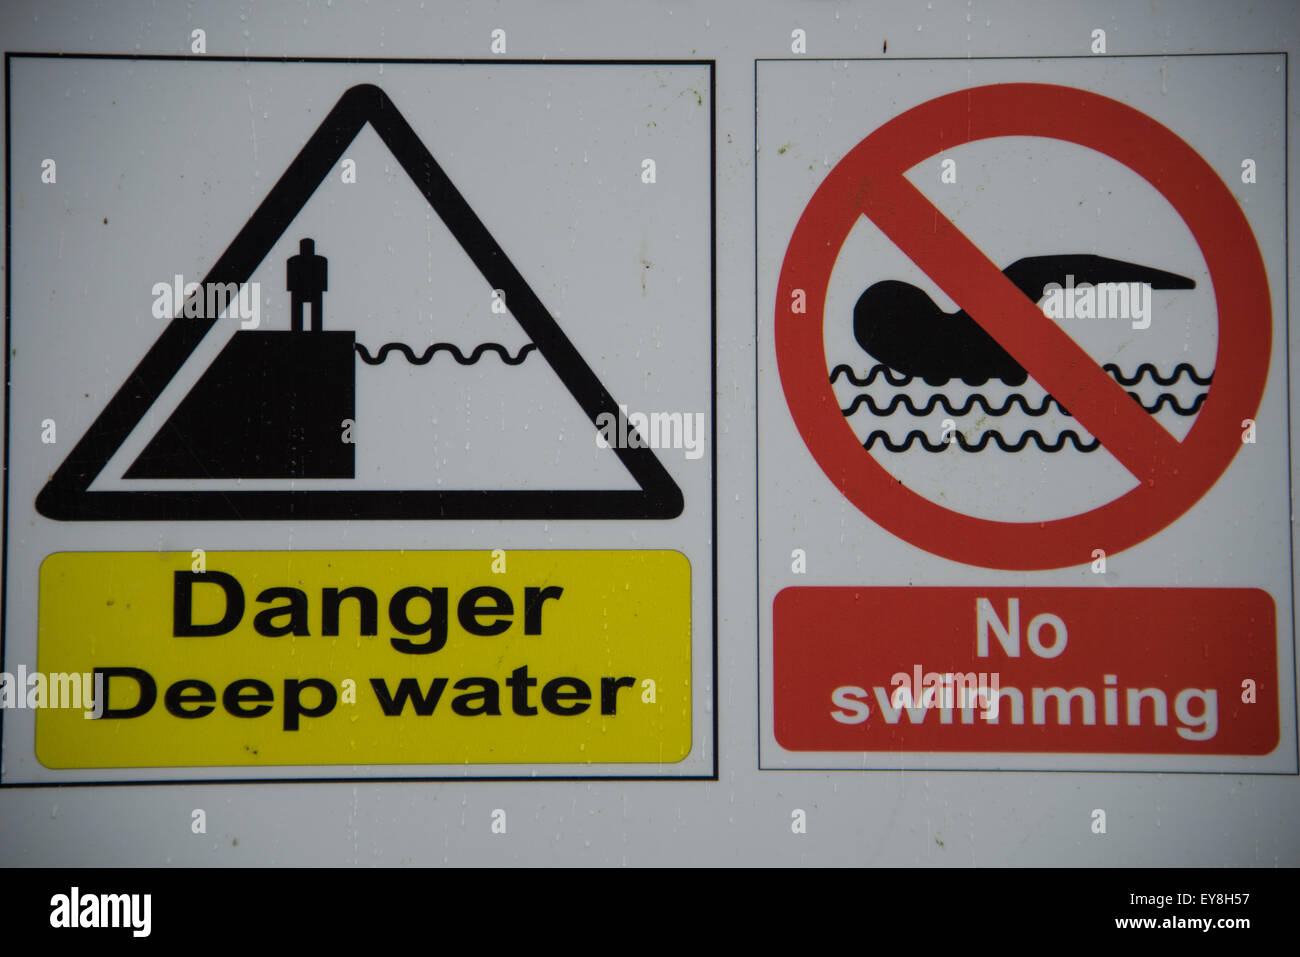 Danger deep water no swimming sign Stock Photo